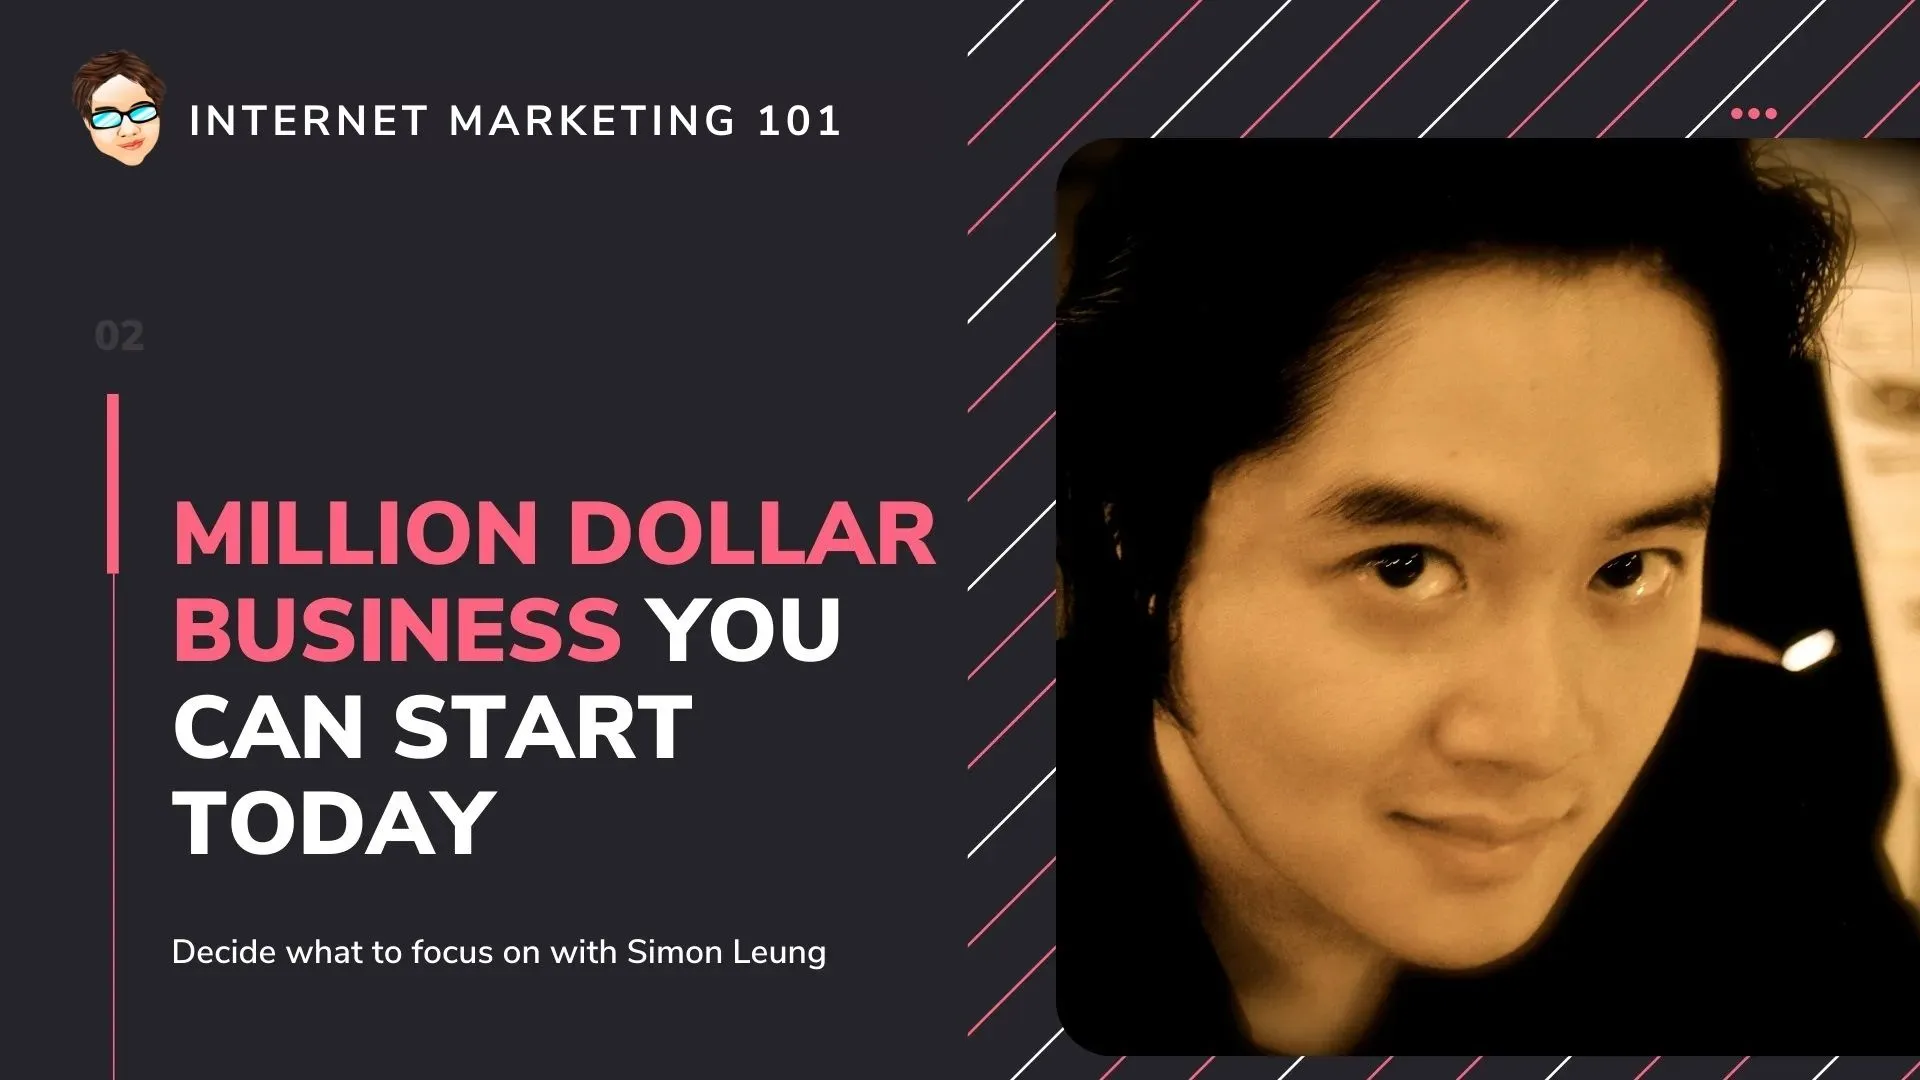 Internet Marketing 101 - Million Dollar Businesses You Can Start Tdday (Simon Leung)